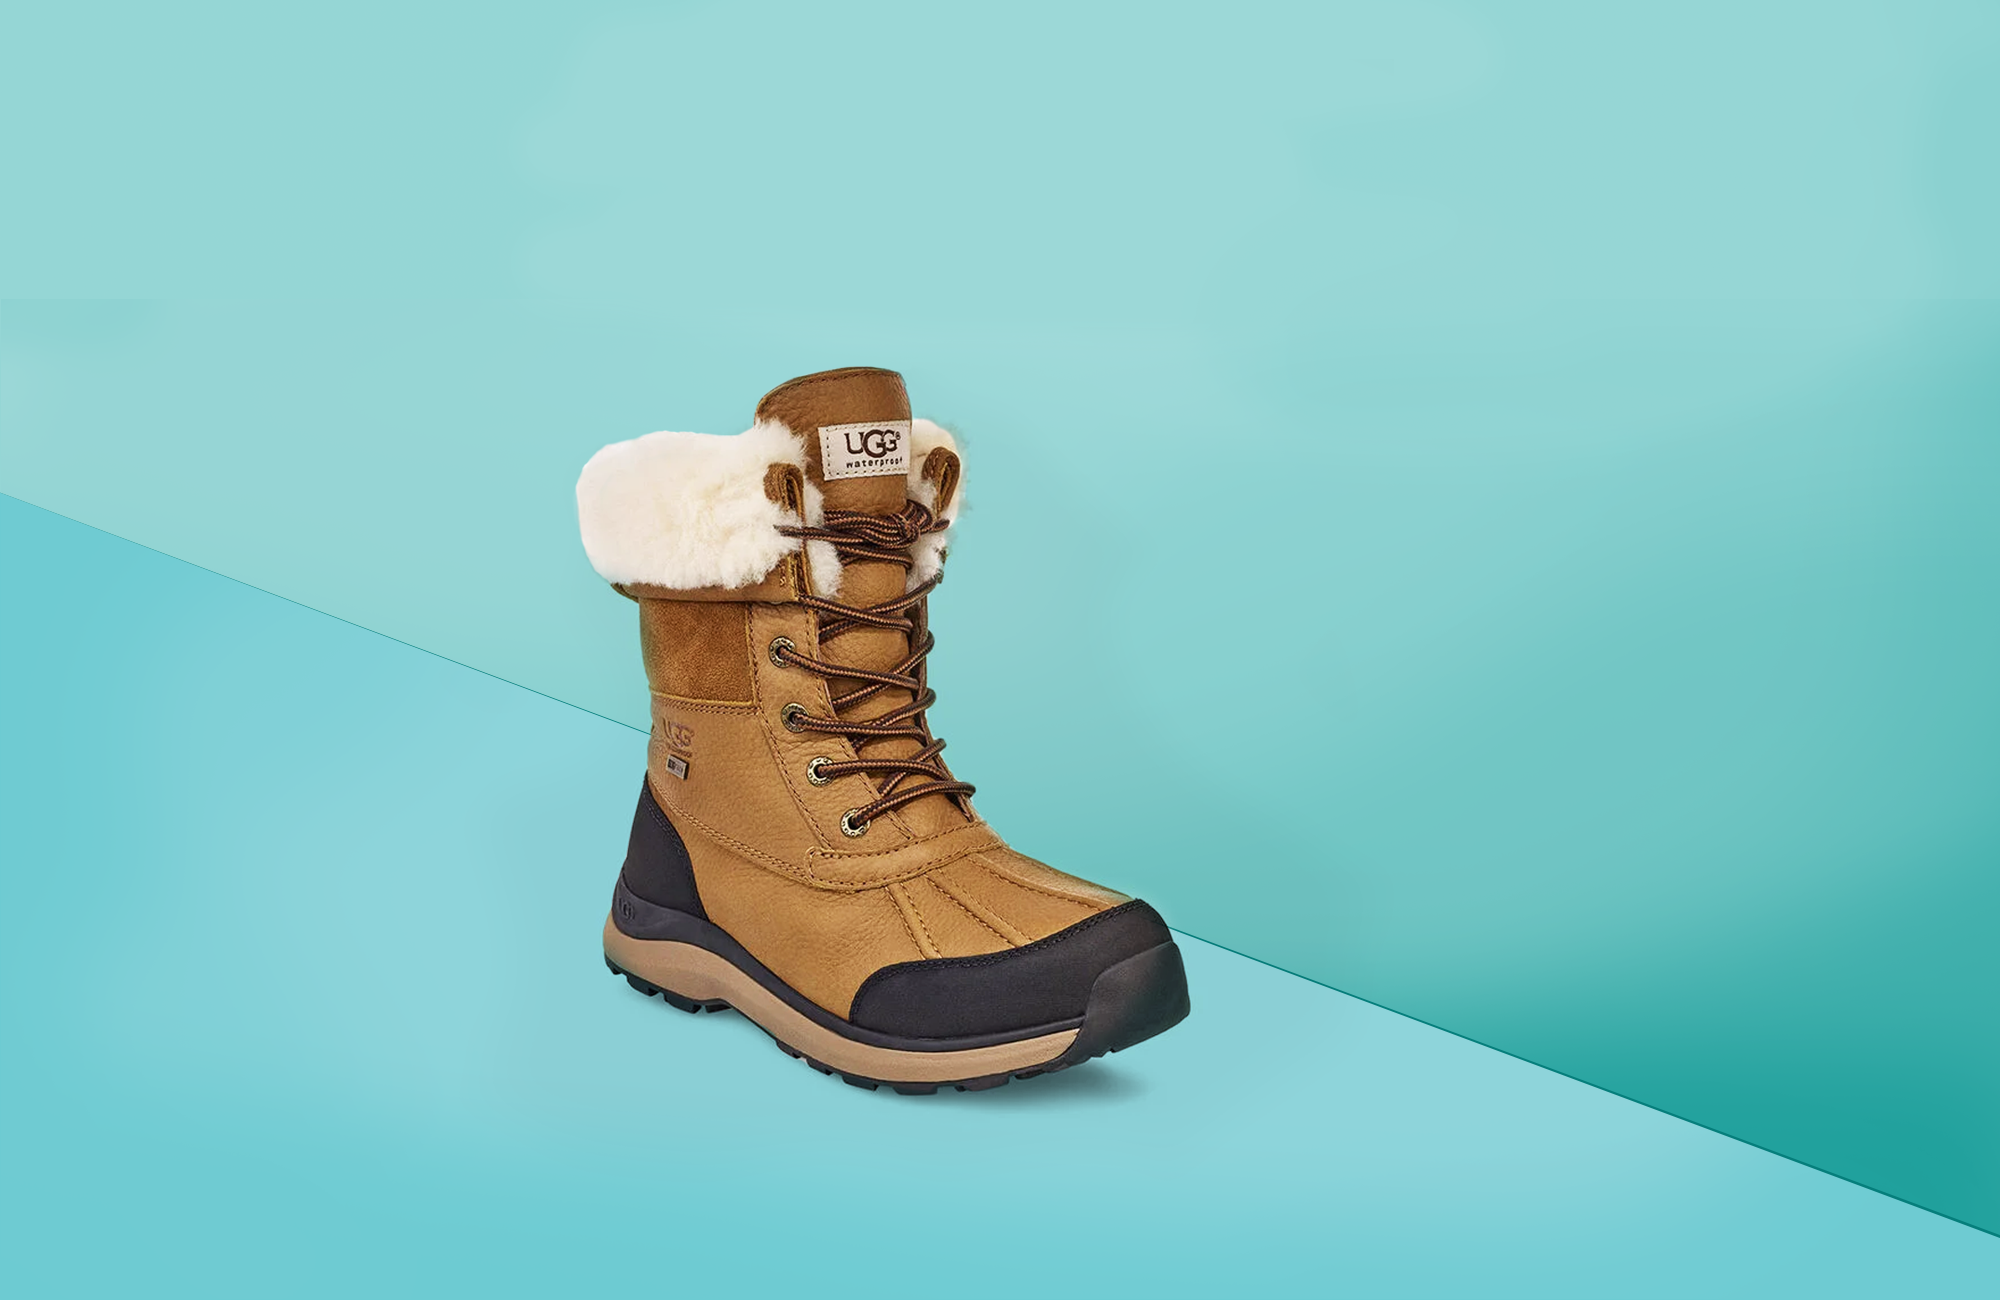 22 Best Winter Boots for Women 